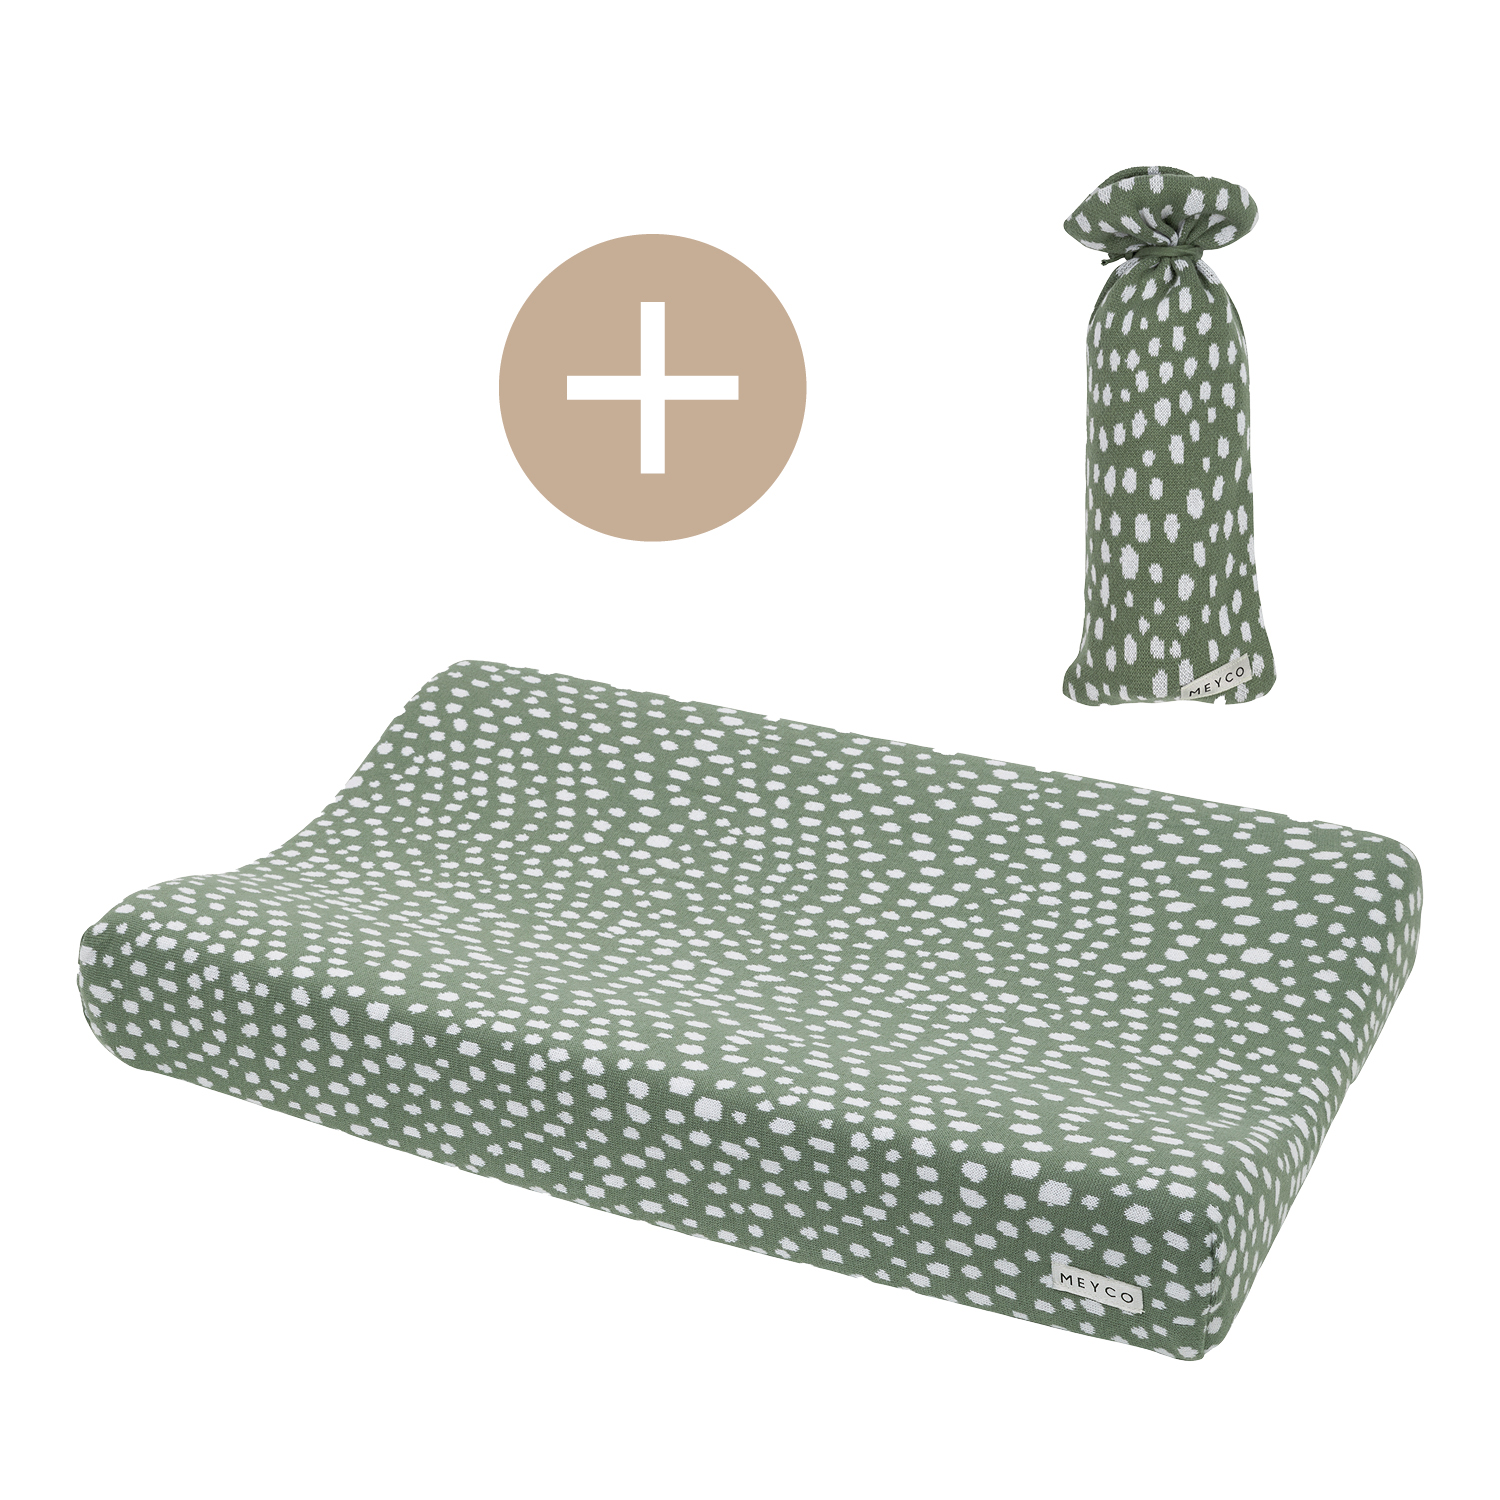 Wickelauflagenbezug + Wärmflaschenbezug Cheetah - forest green - 50x70cm